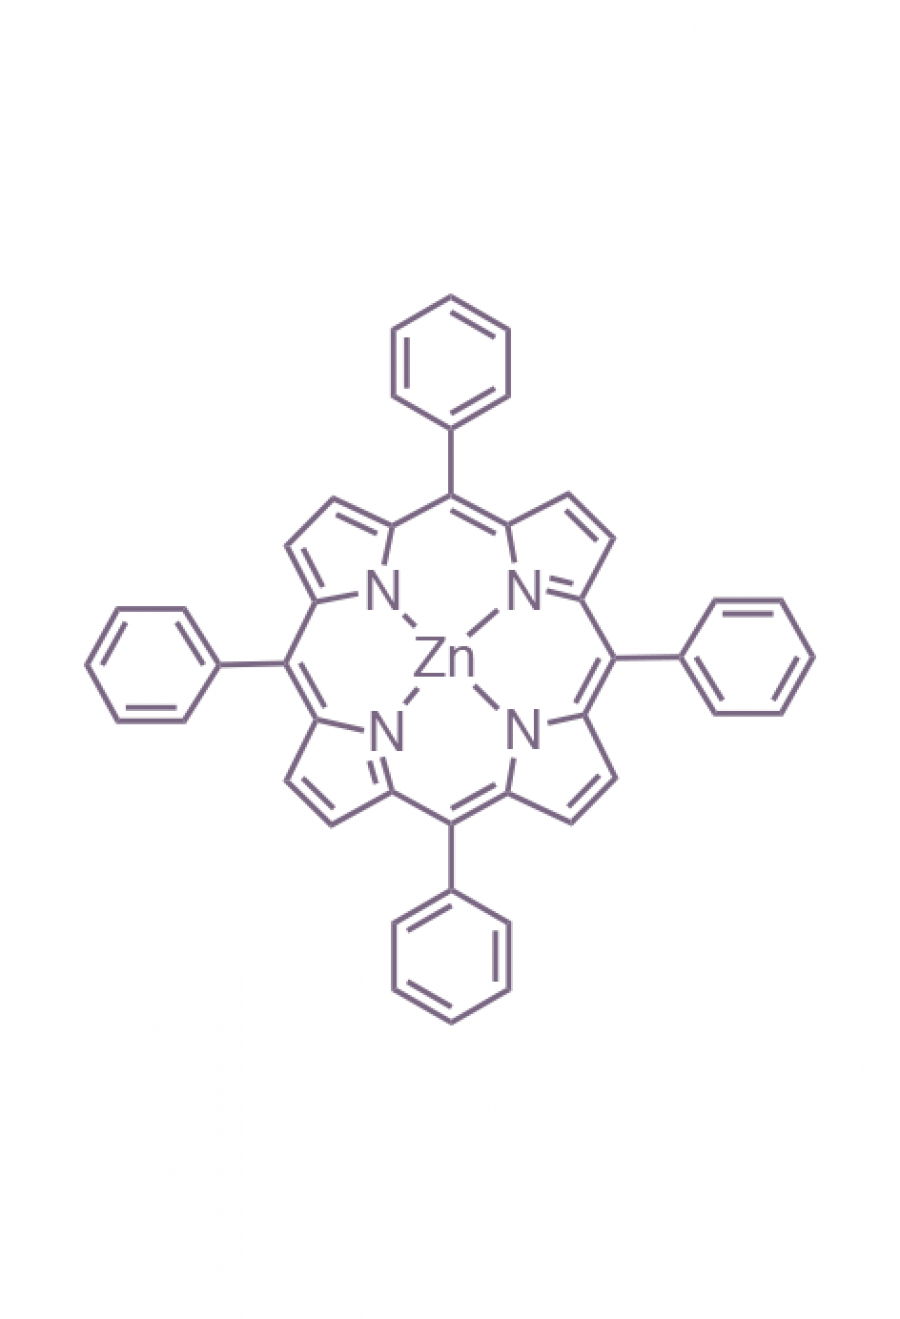 zinc(II) 5,10,15,20-(tetraphenyl)porphyrin  | Porphychem Expert porphyrin synthesis for research & industry